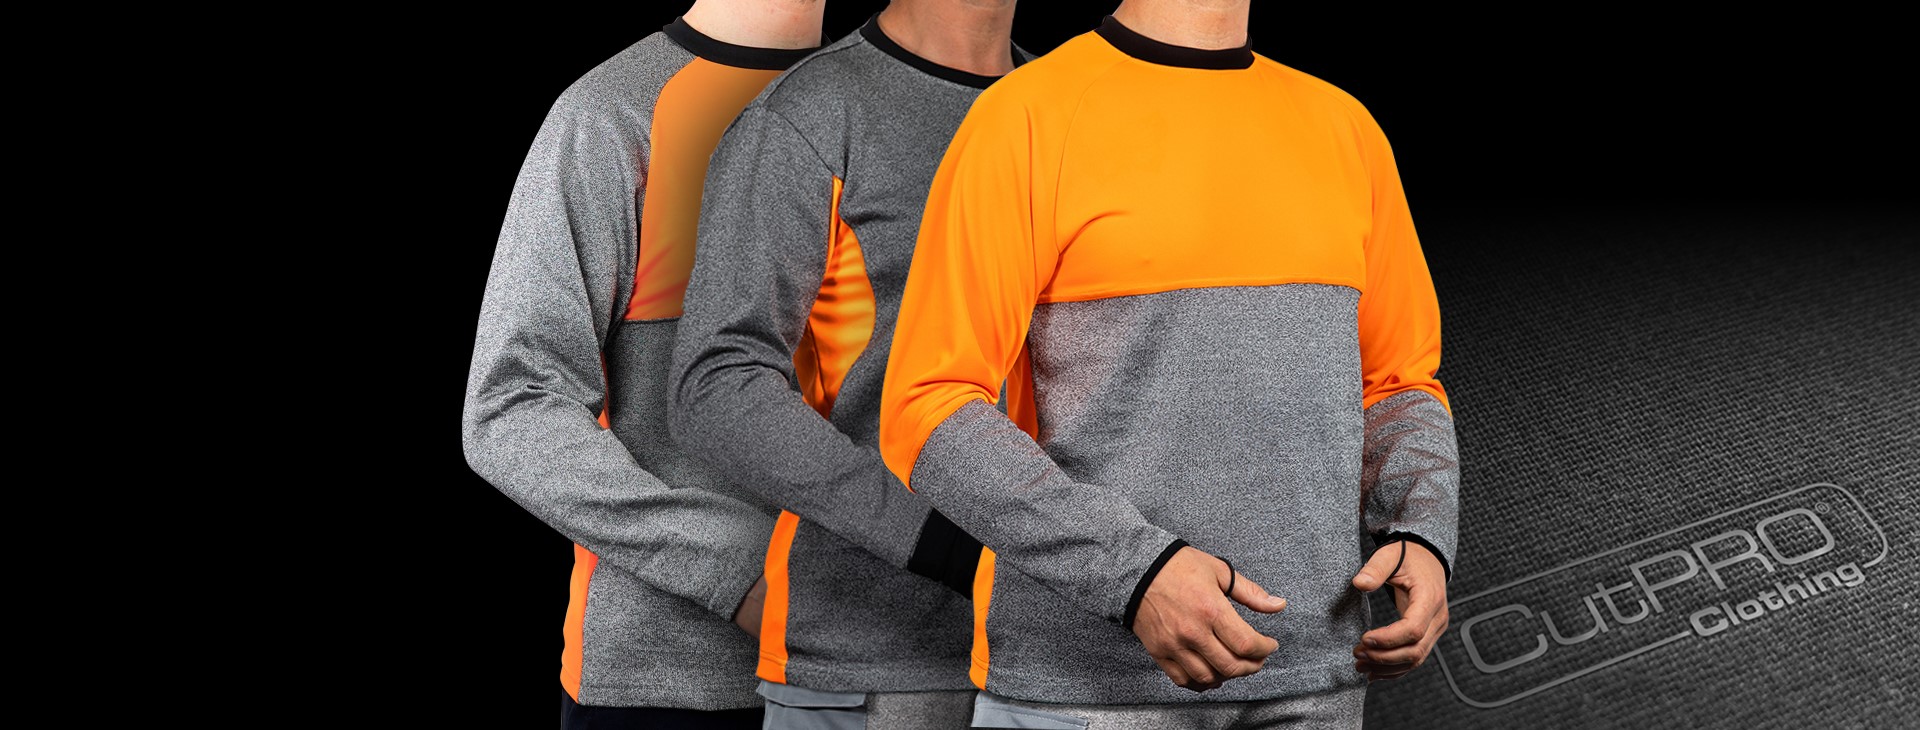 CutPRO cut resistant clothing header image